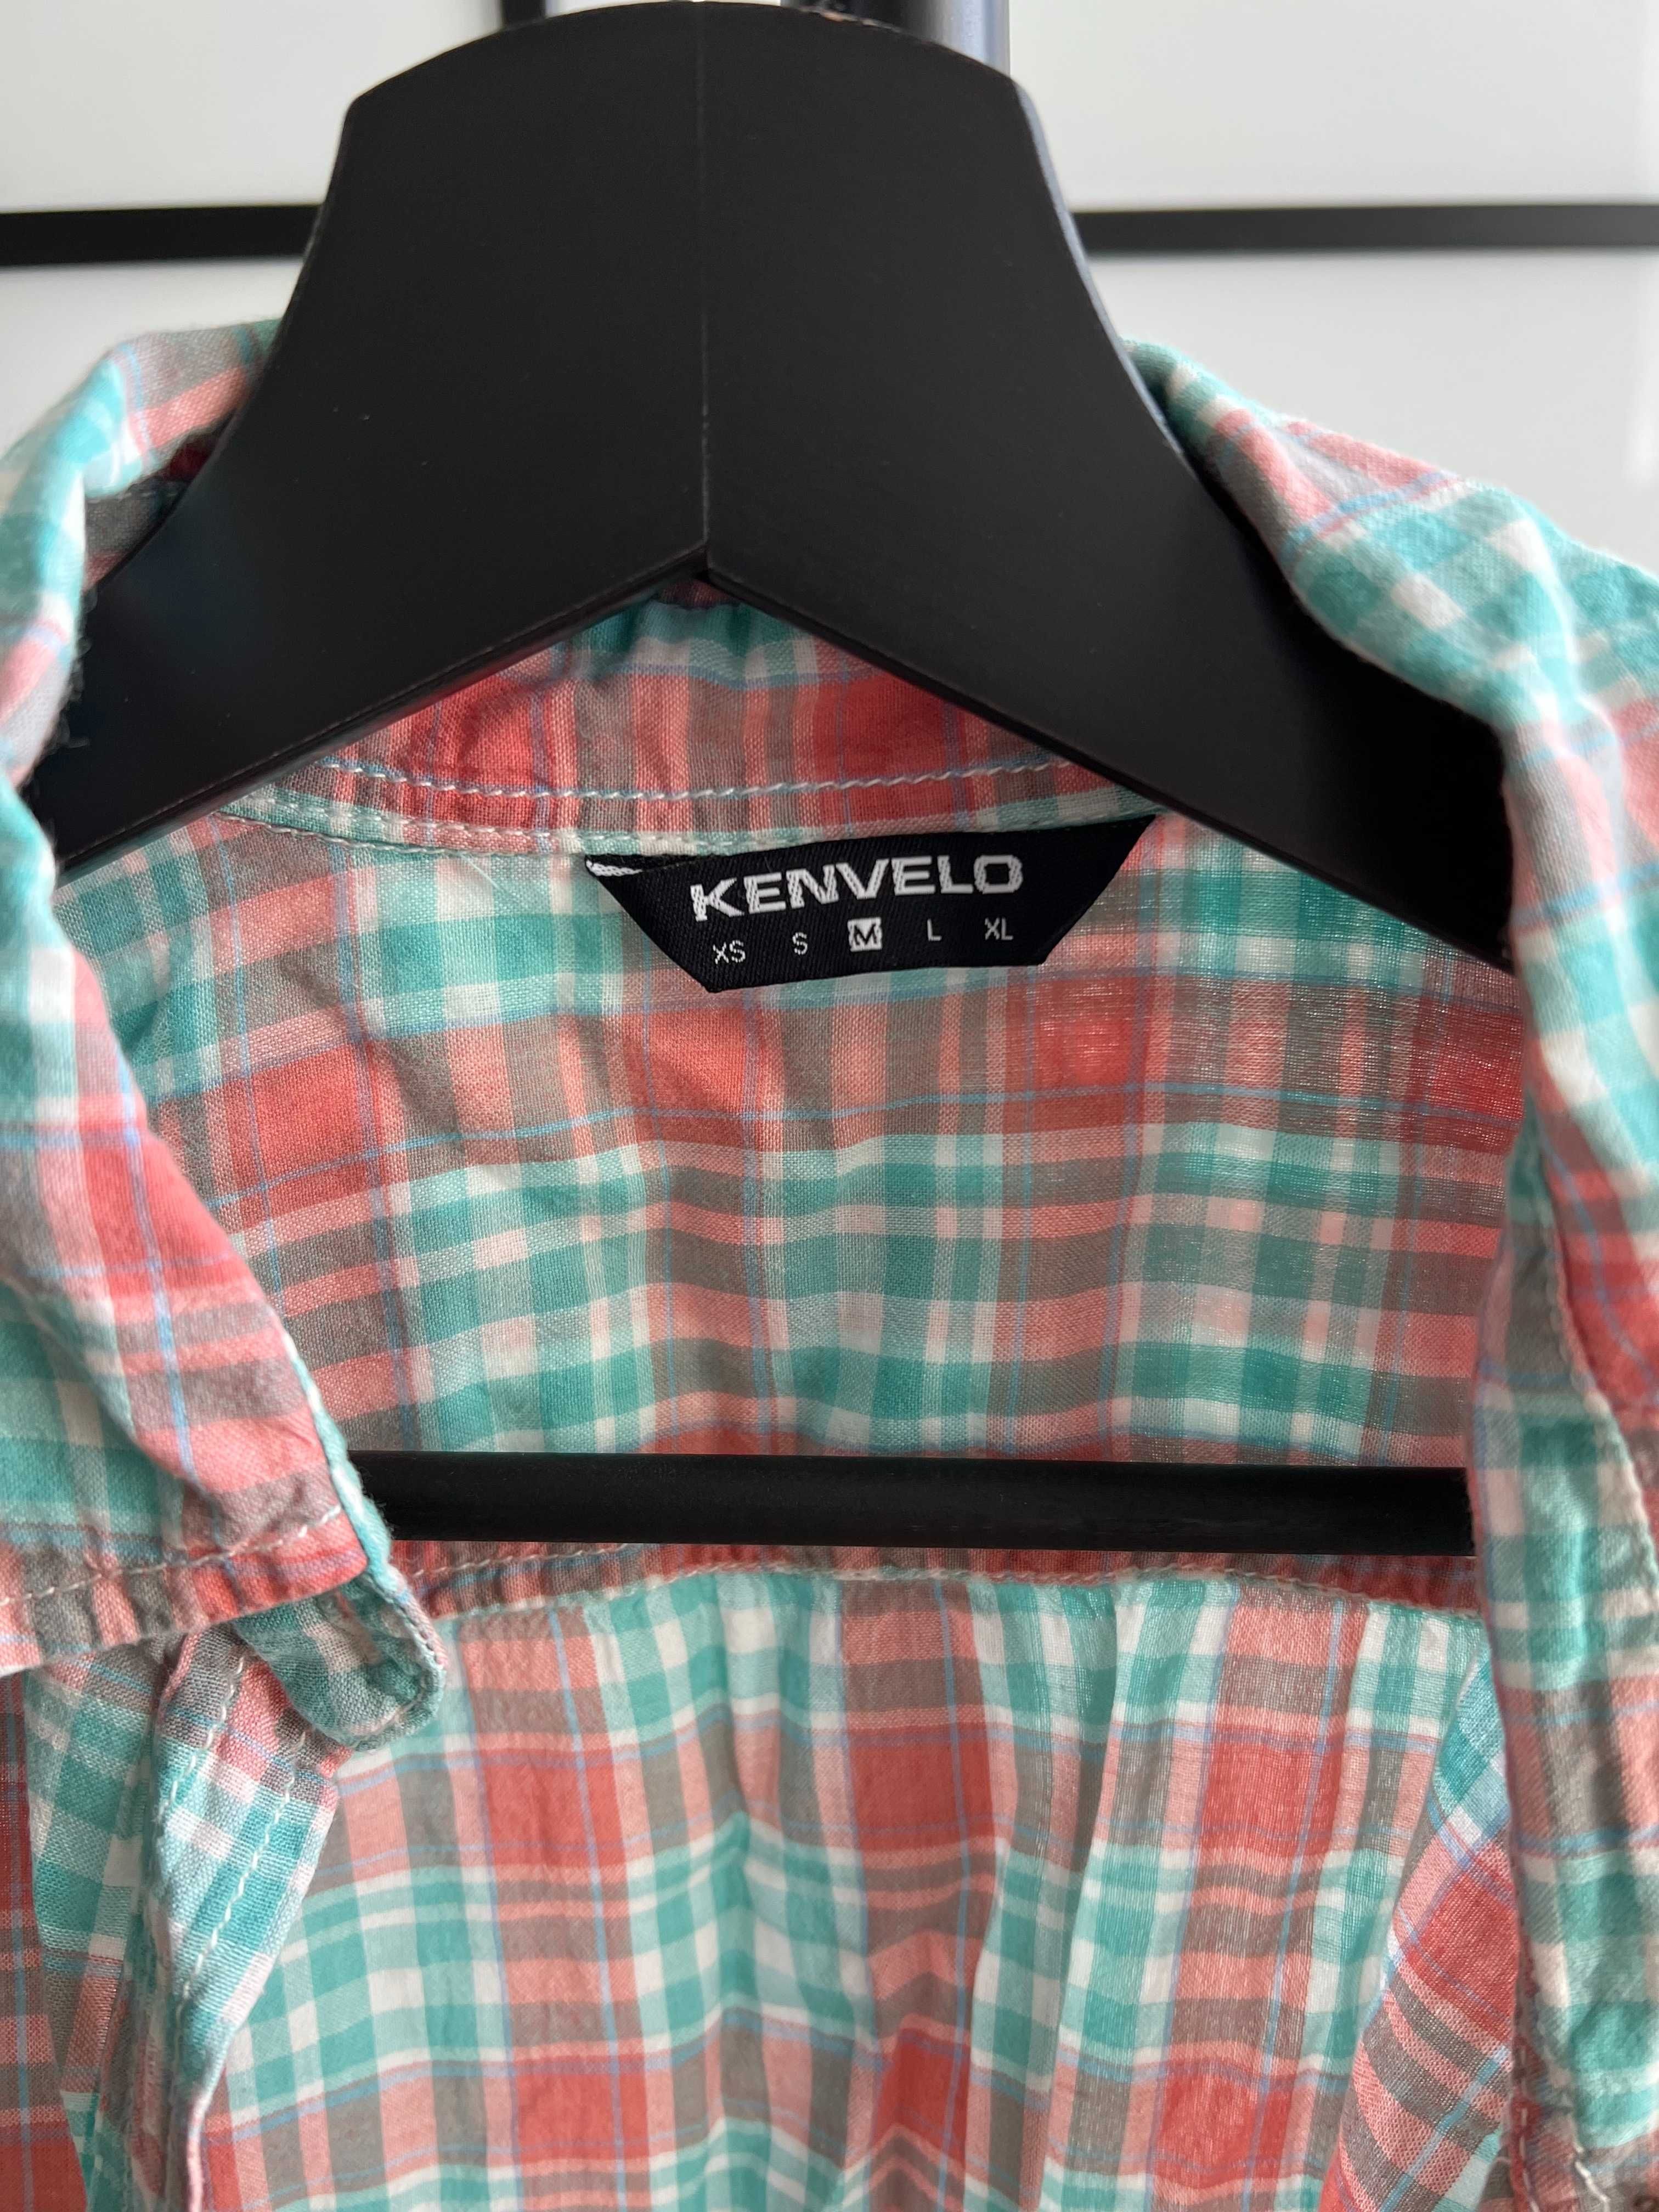 Ризи с къс ръкав, KENVELO размер М, H&M размер 40 и 42, карирани ризи